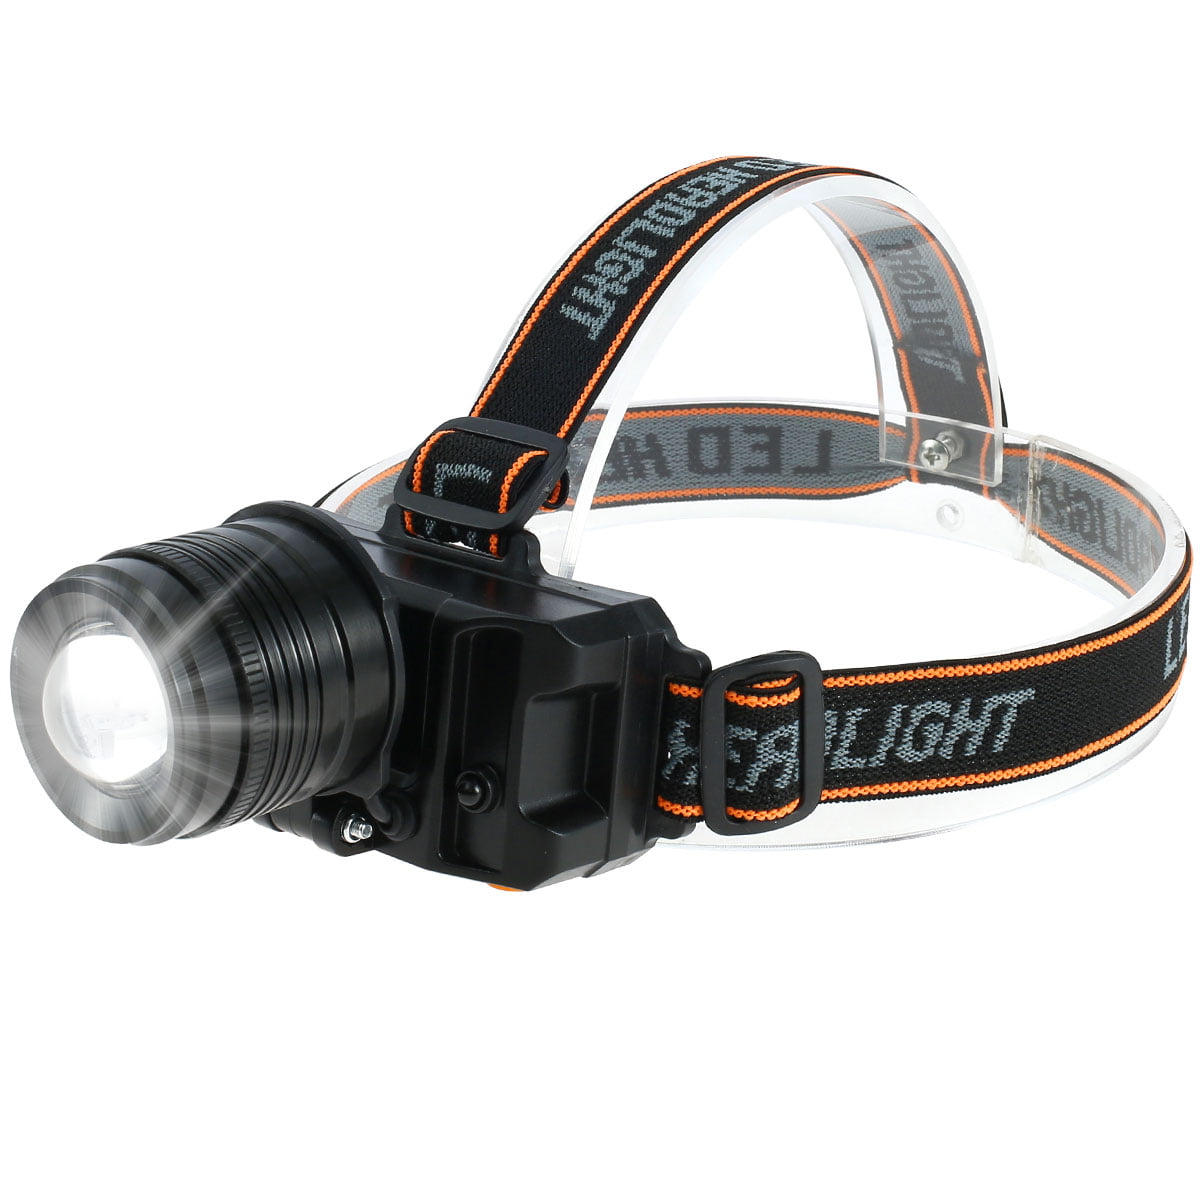 Portable 500Lm Headlight Zoomable LED Headlamp Flashlight Torch Lamp Light 